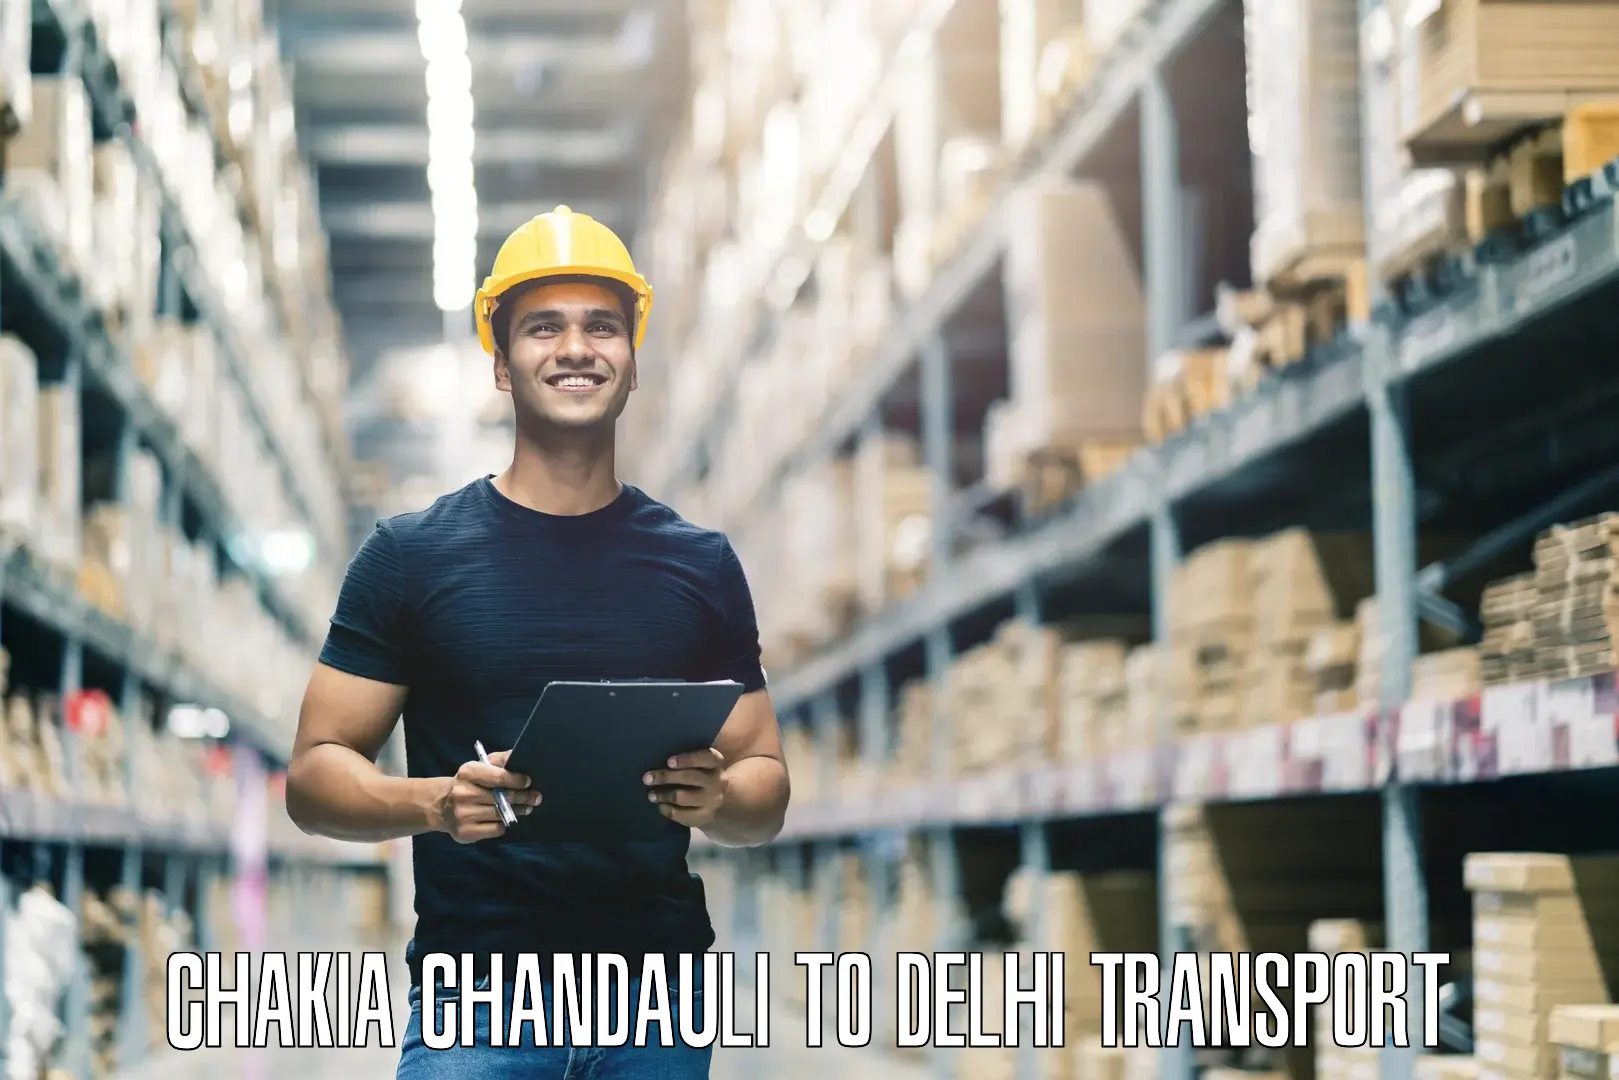 India truck logistics services Chakia Chandauli to NCR